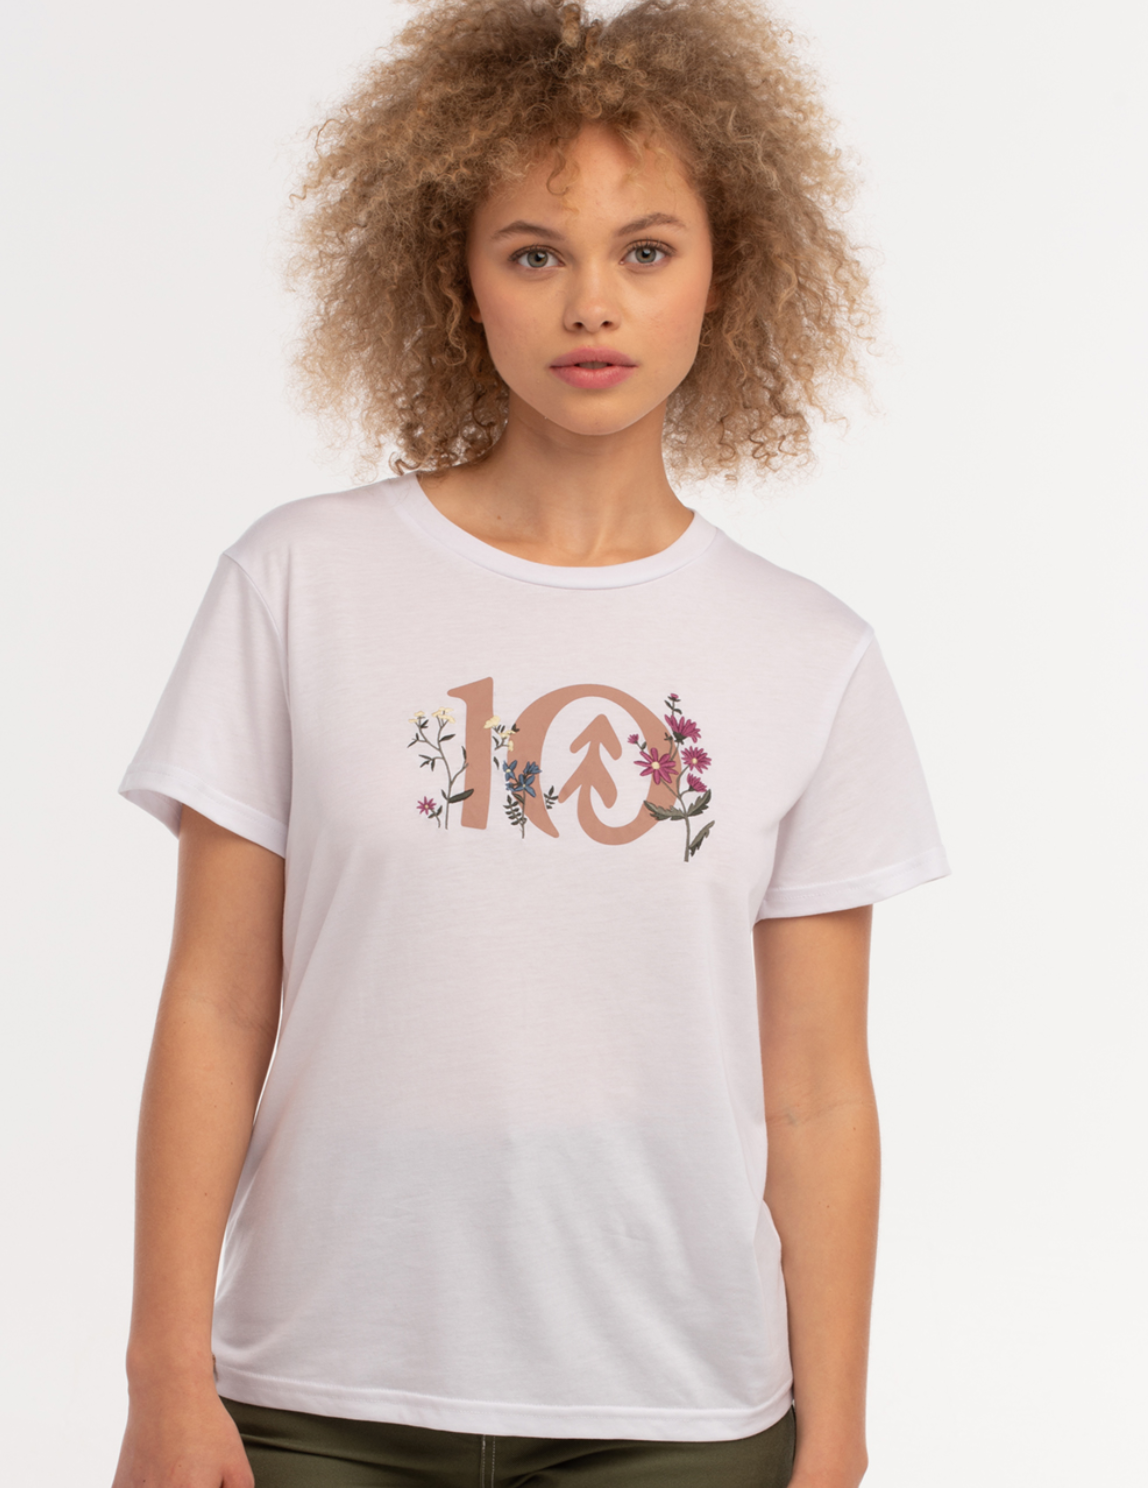 TenTree Women's Floral Logo T-Shirt